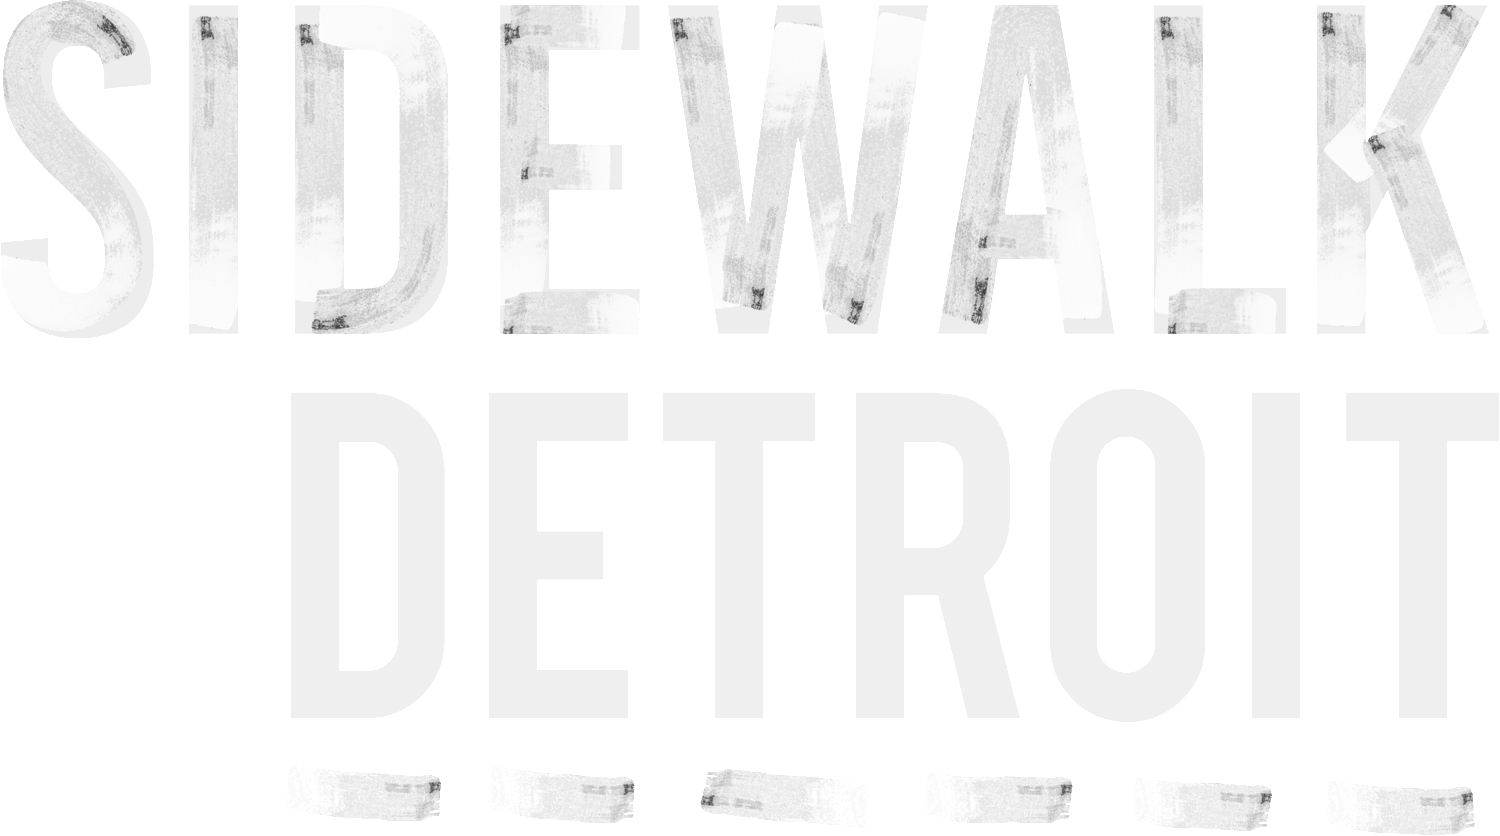 Sidewalk Detroit